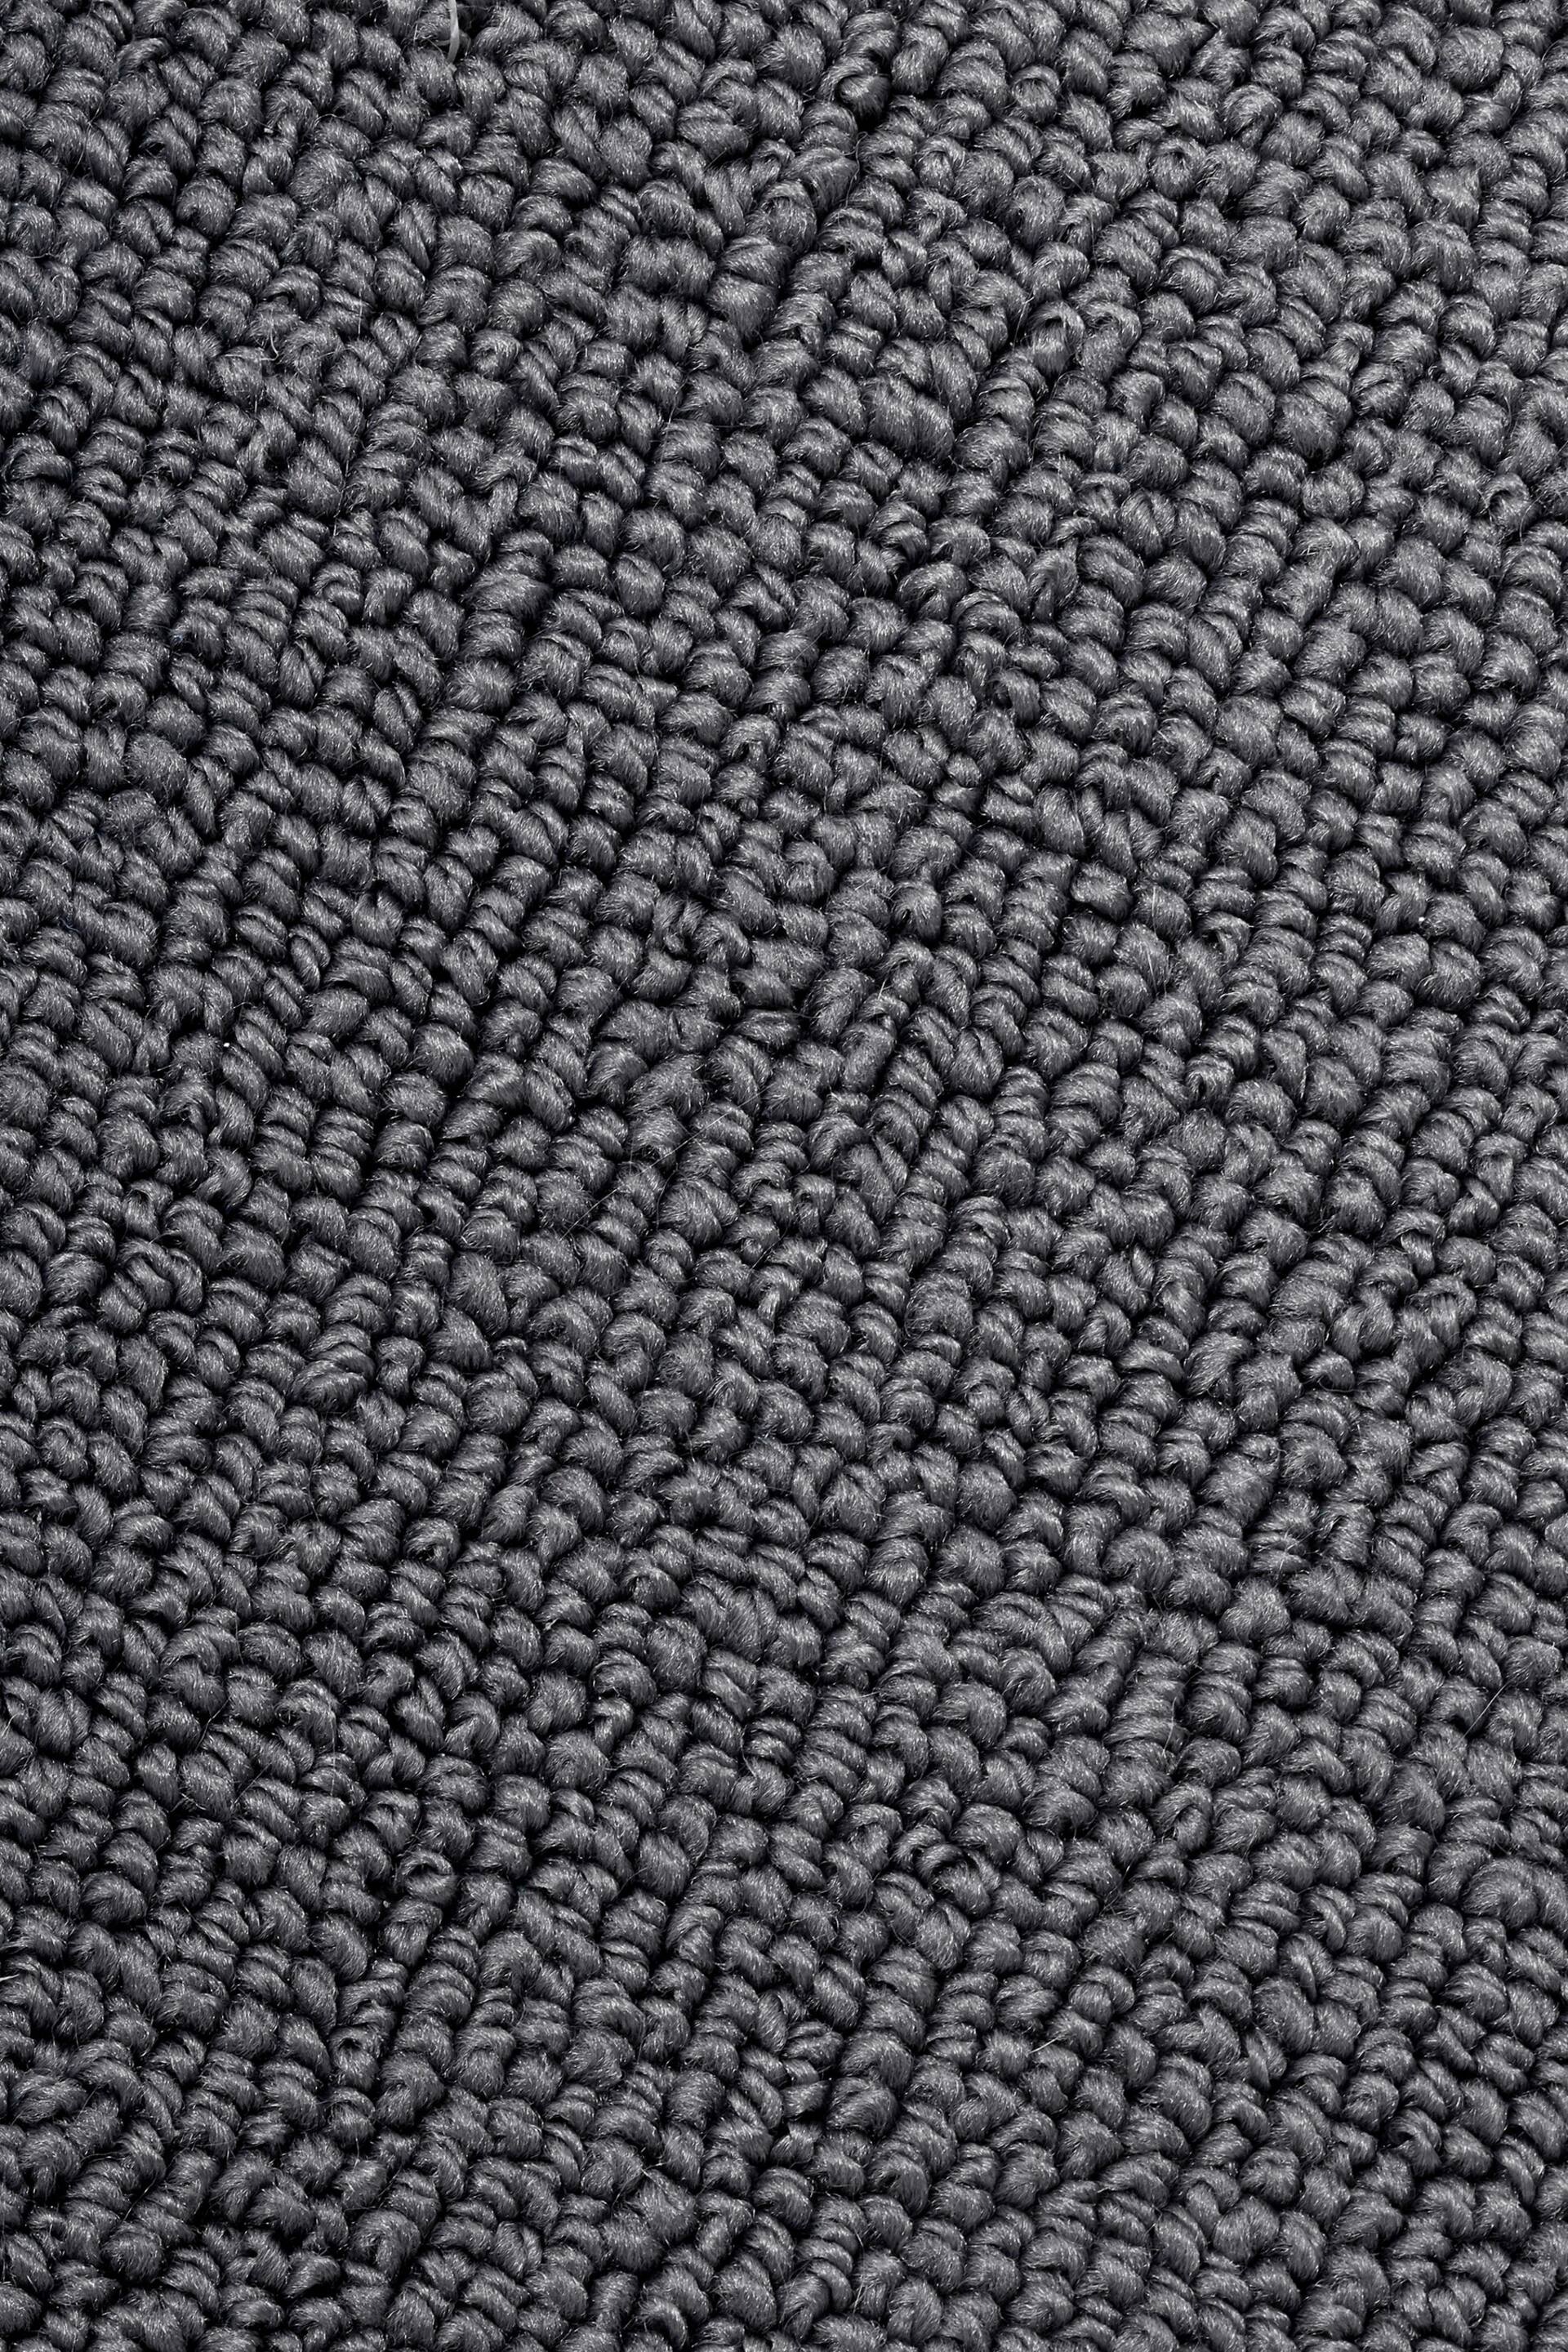 2 Pack Grey Washable Doormats - Image 3 of 4